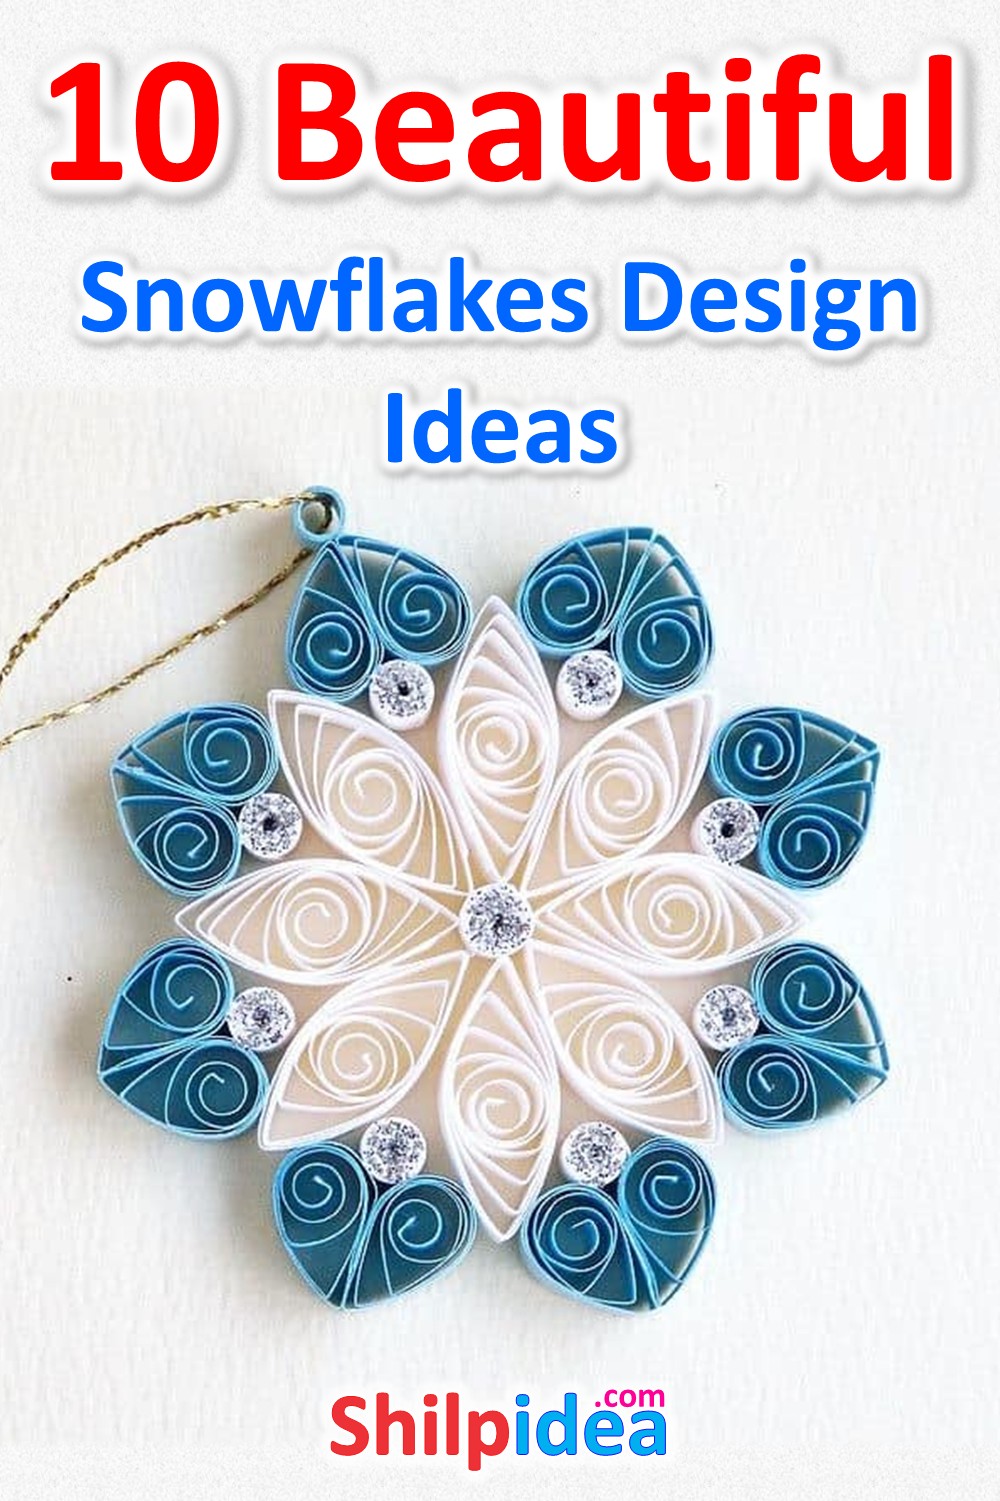 quilling-snowflakes-design-ideas-shilpidea-pin